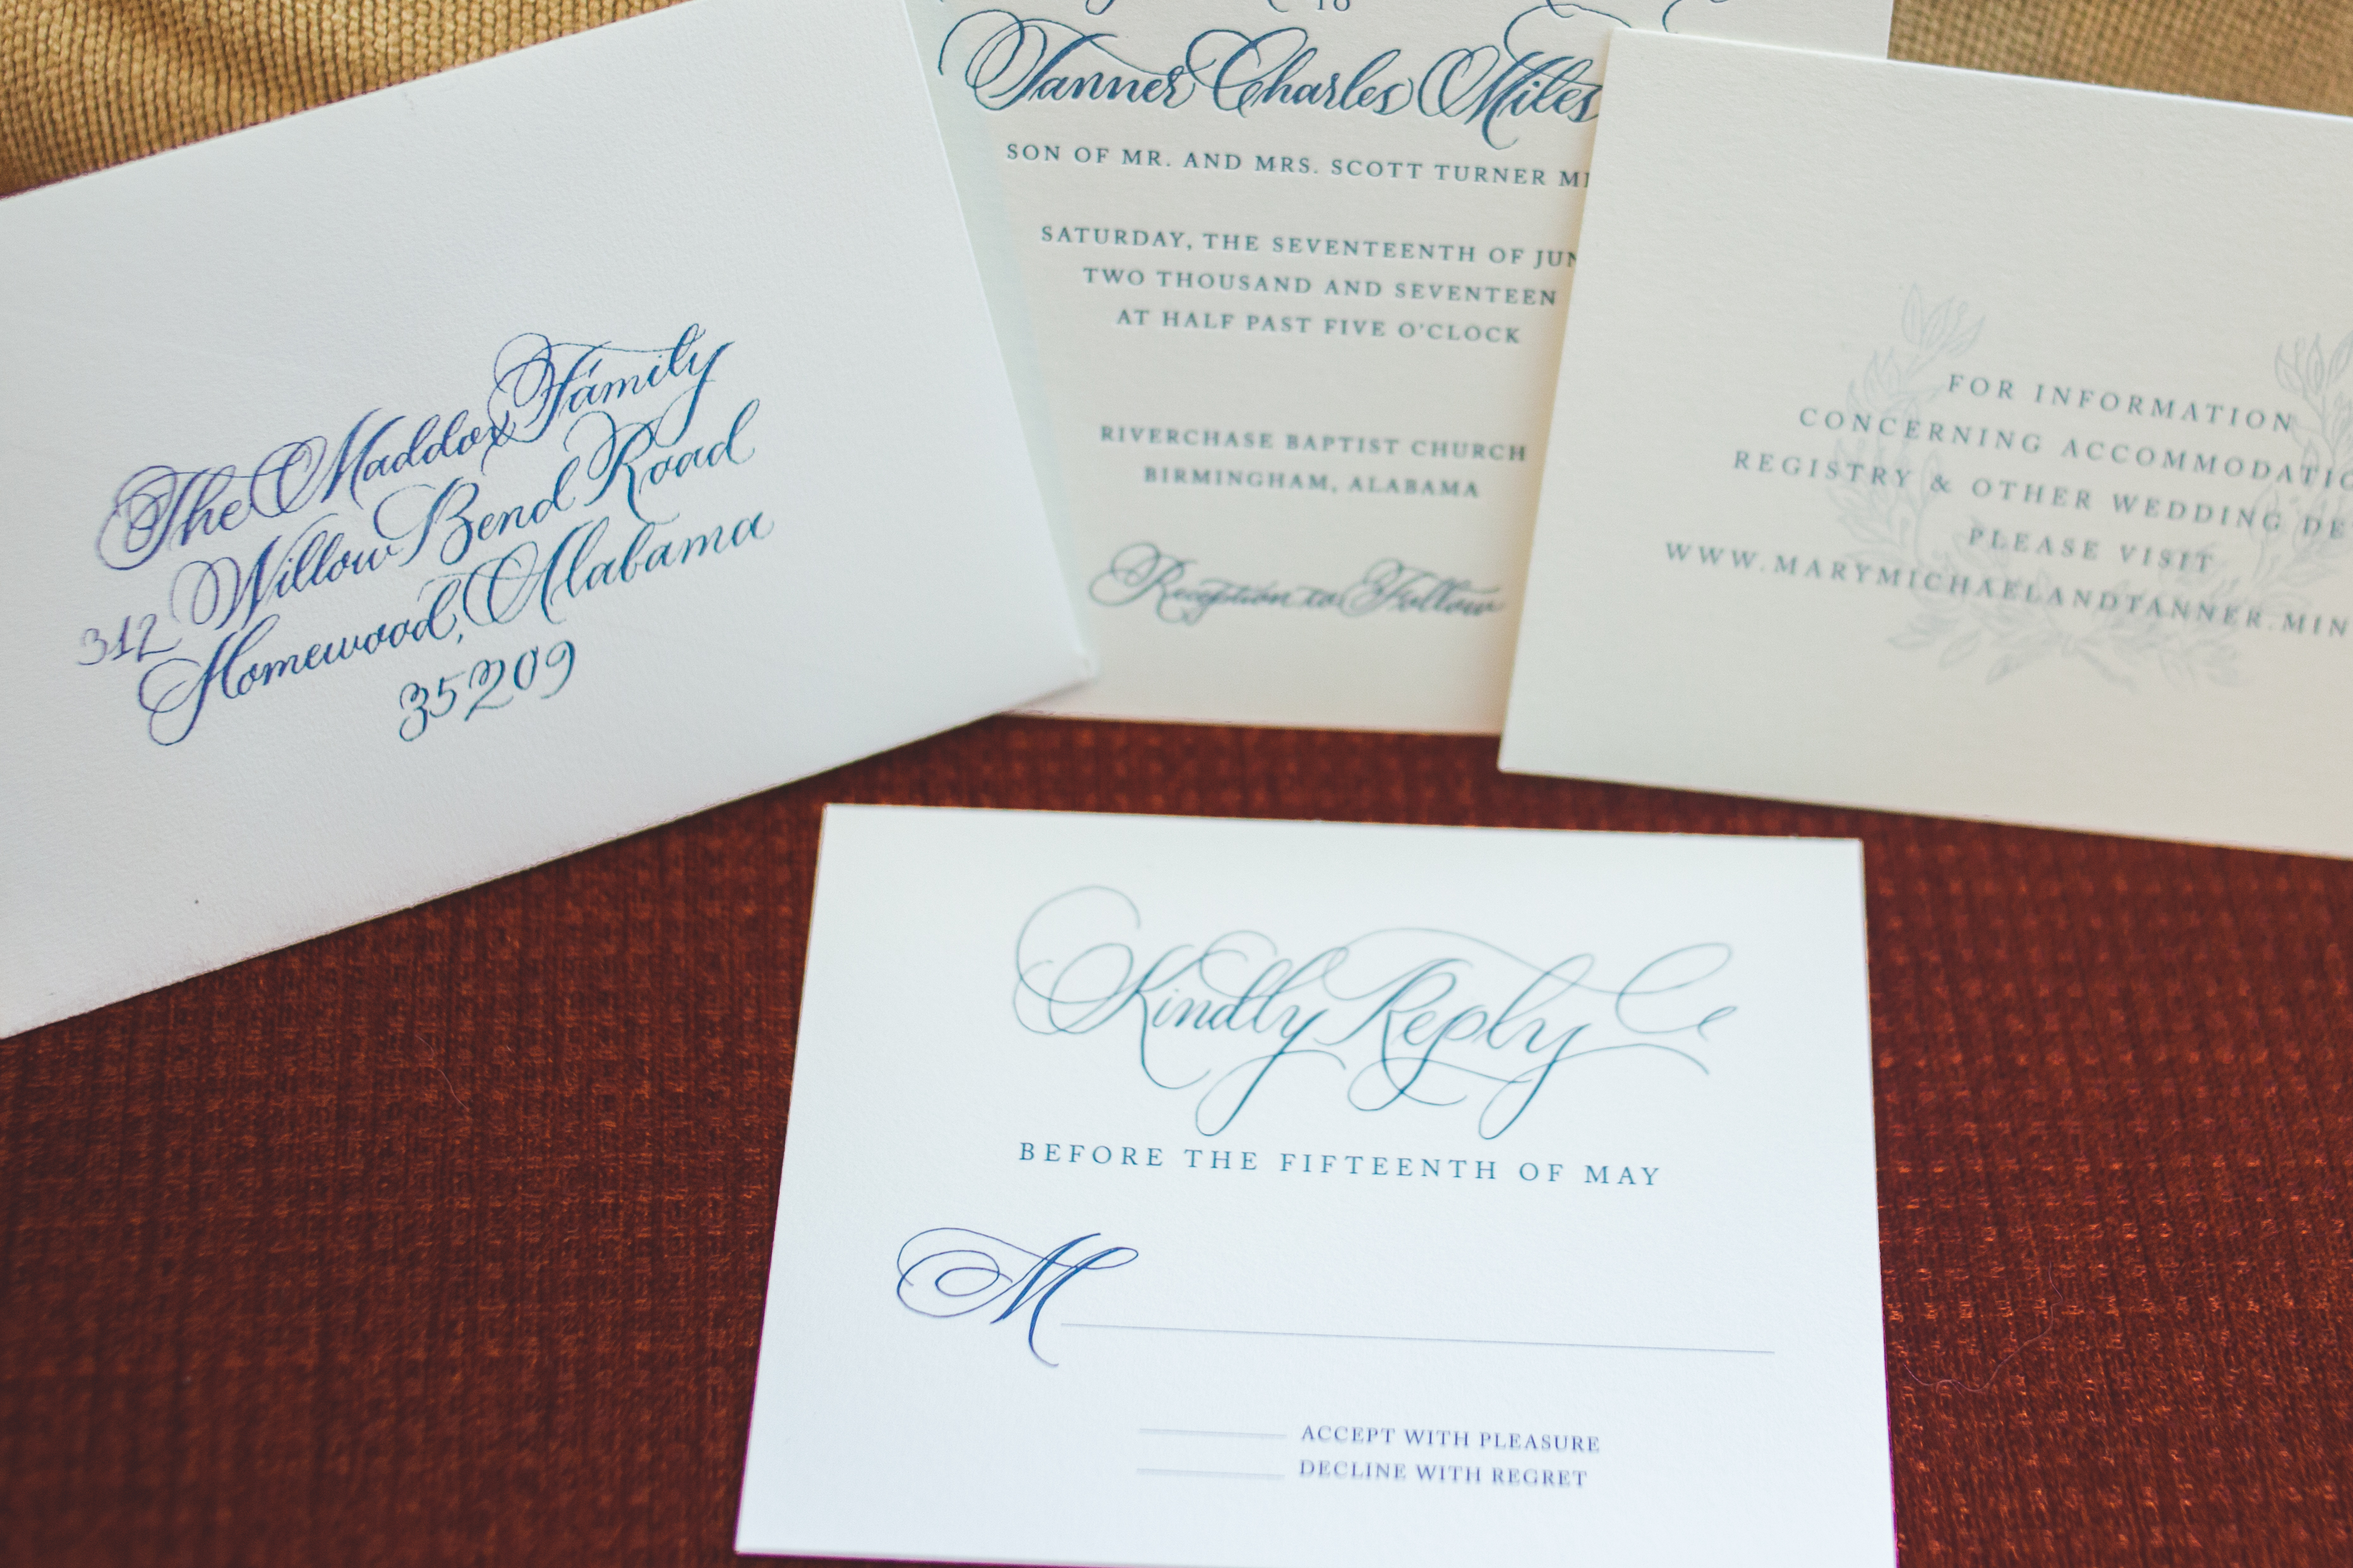 Classic southern wedding invitation calligraphy for The Club, Birmingham, Alabama wedding by Ashlyn Writes Wedding Calligraphy Atlanta Wedding Calligrapher